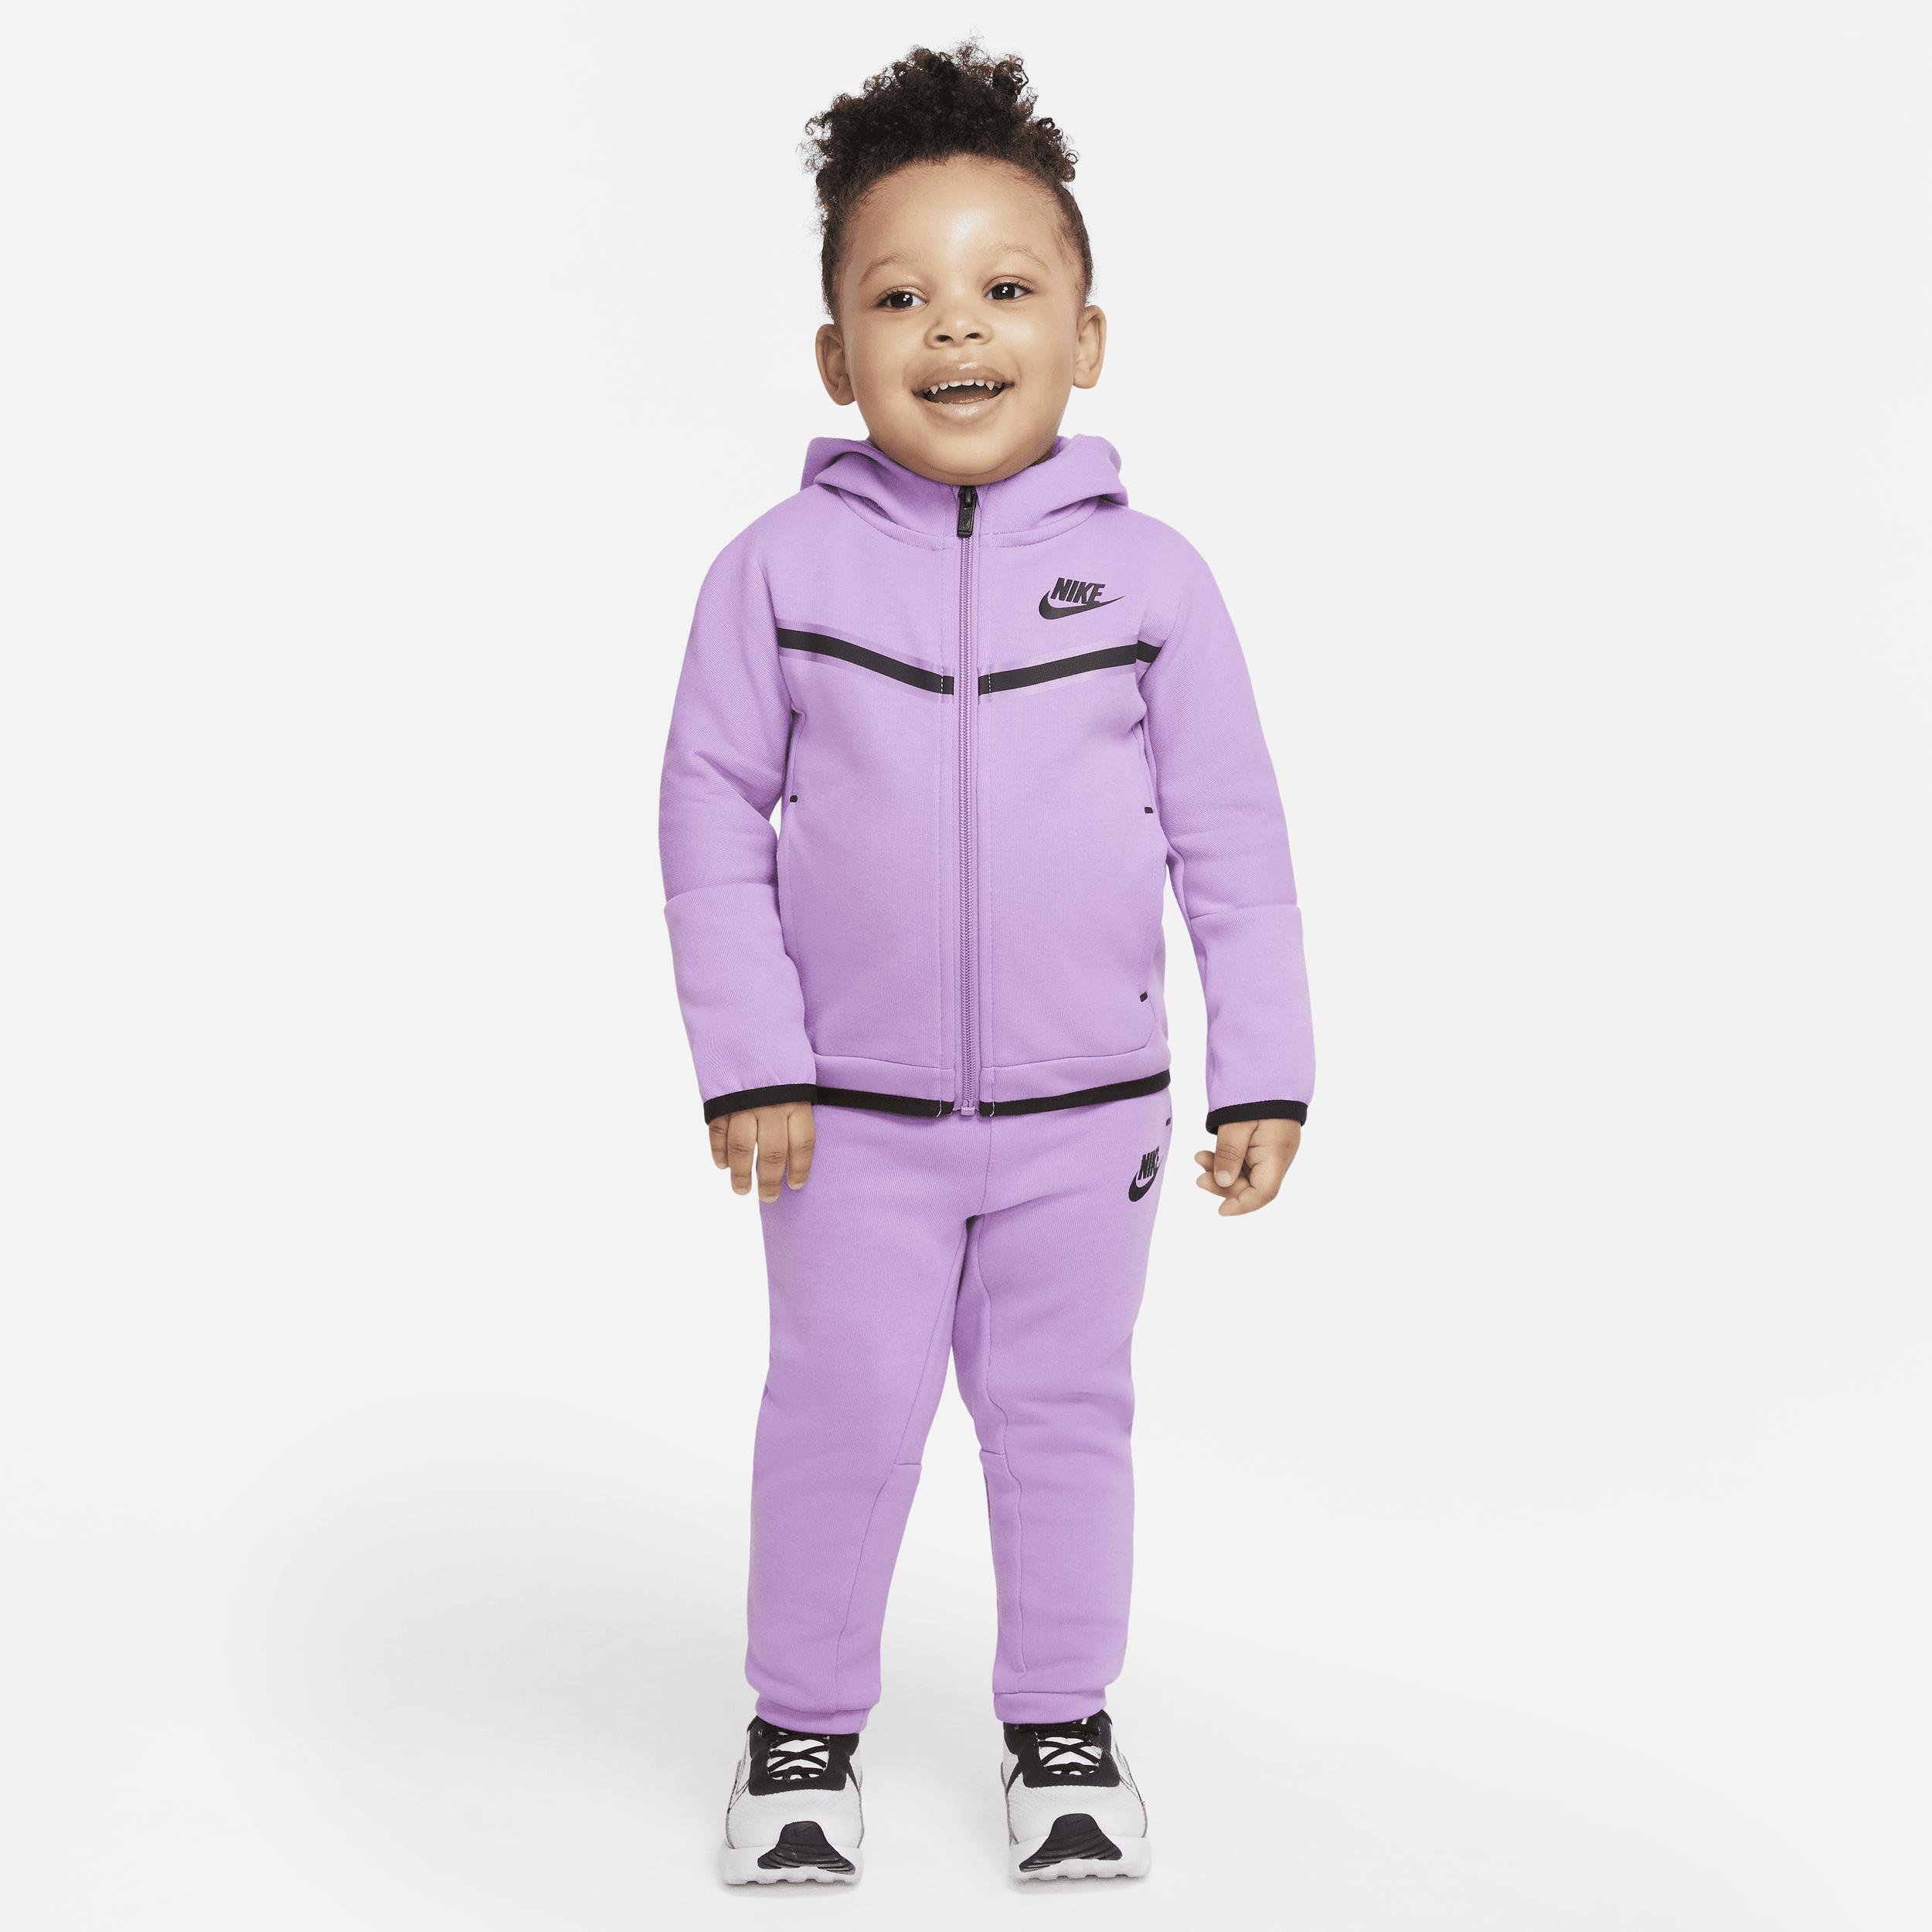 Nike Sportswear Tech Fleece Baby (12-24M) Full-Zip Hoodie and Pants Set by NIKE